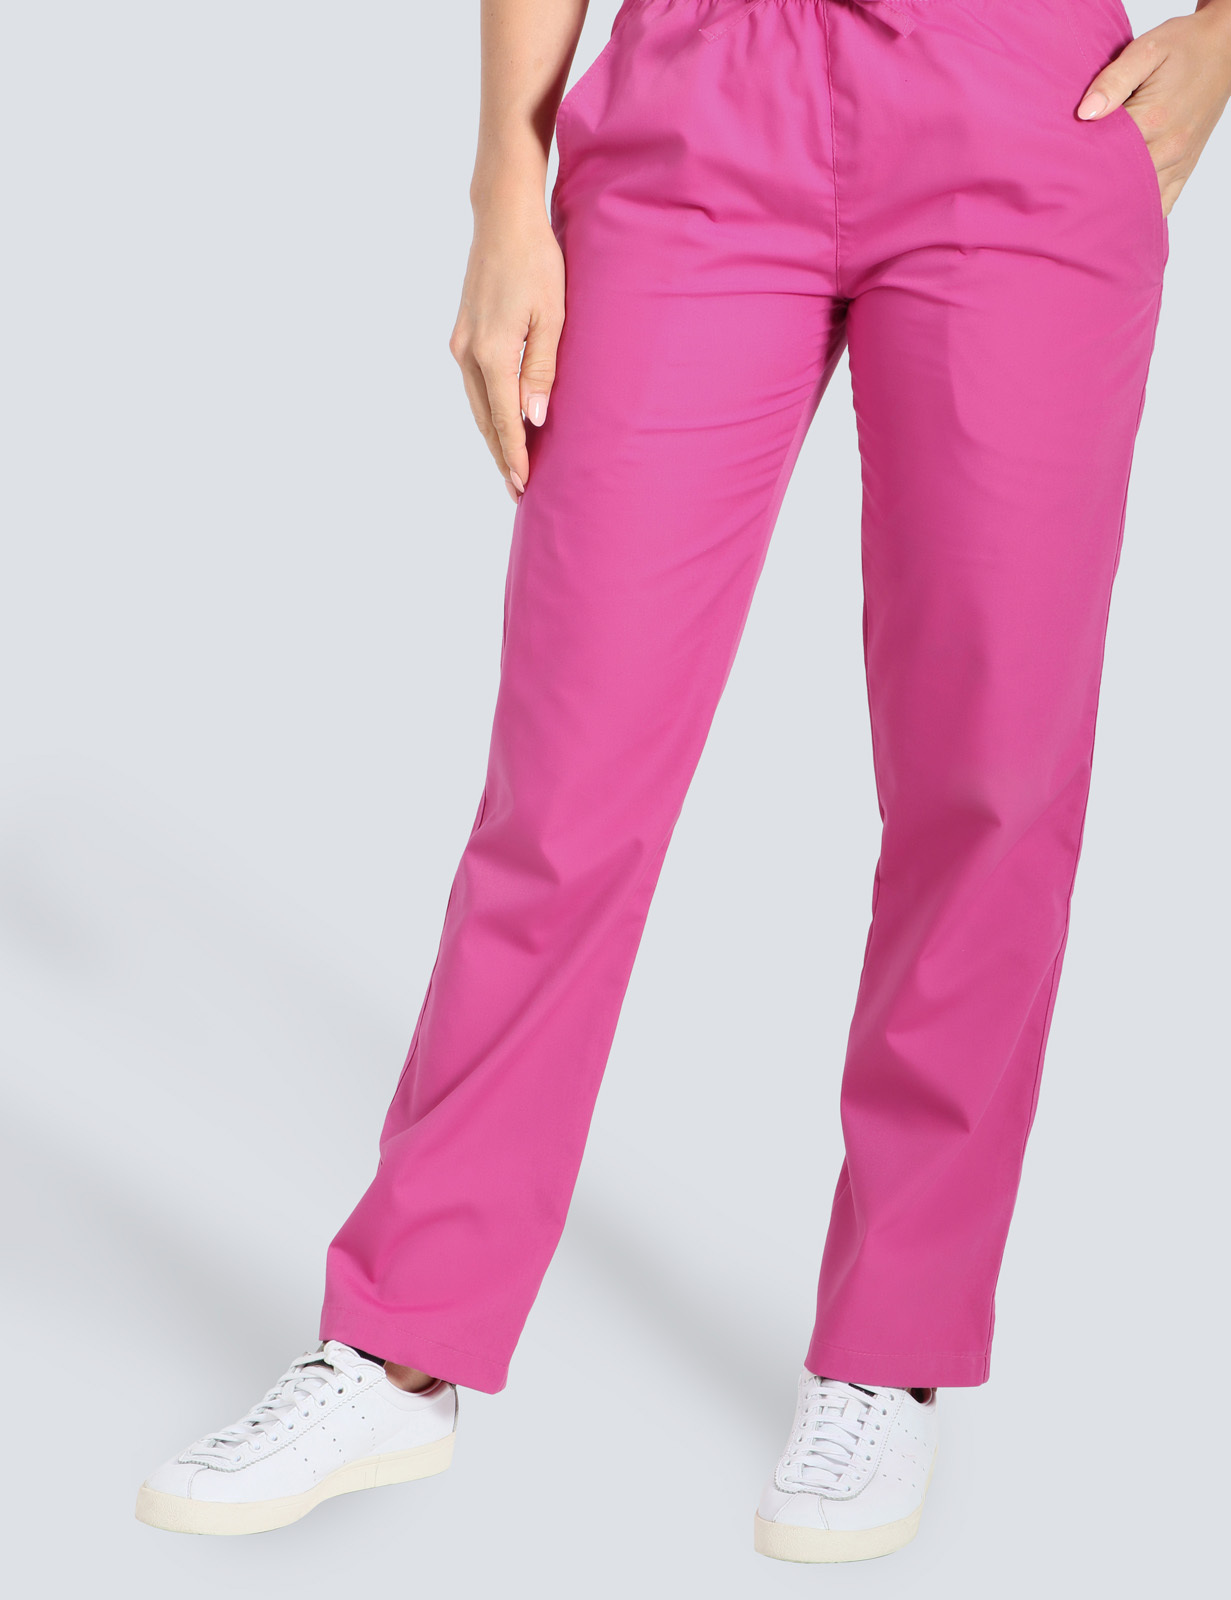 Women's Regular Cut Pants - Pink - X Large